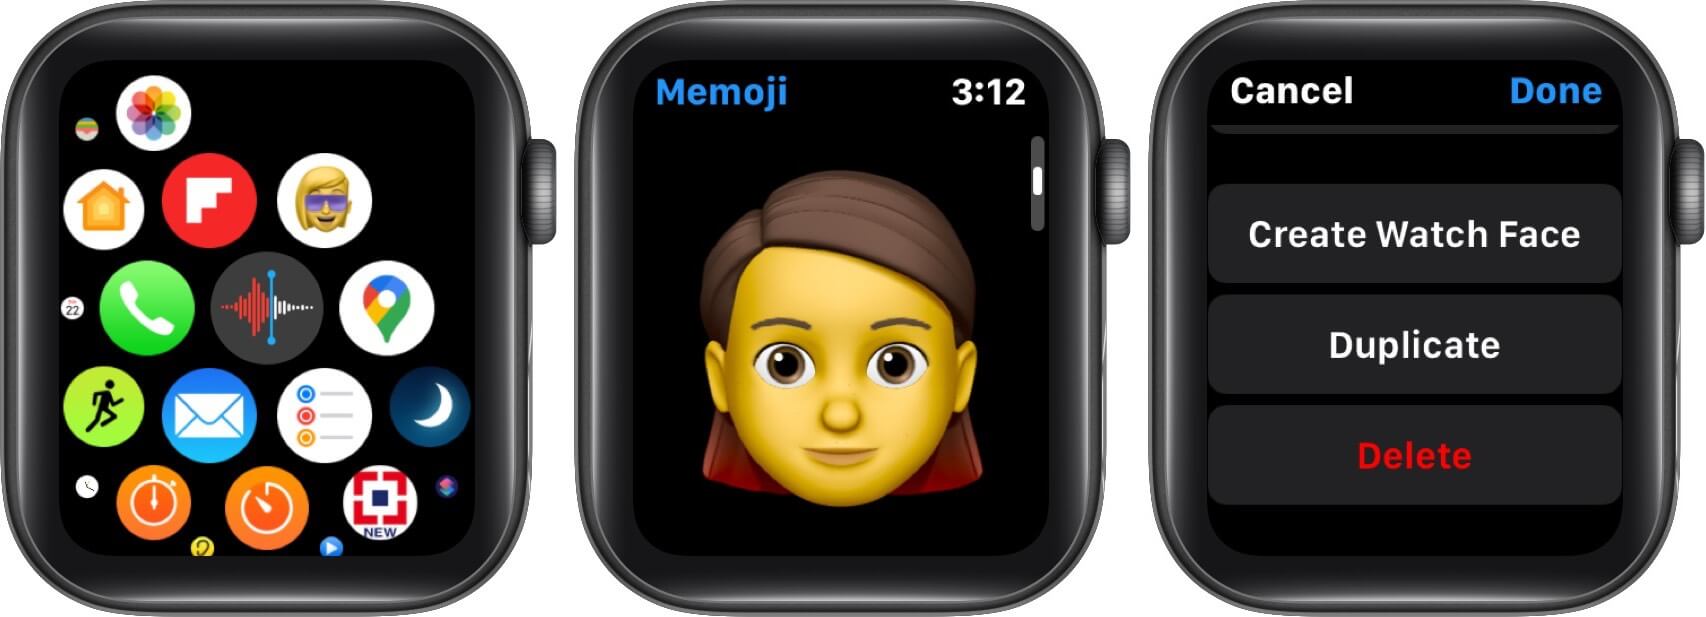 create memoji watch face on apple watch